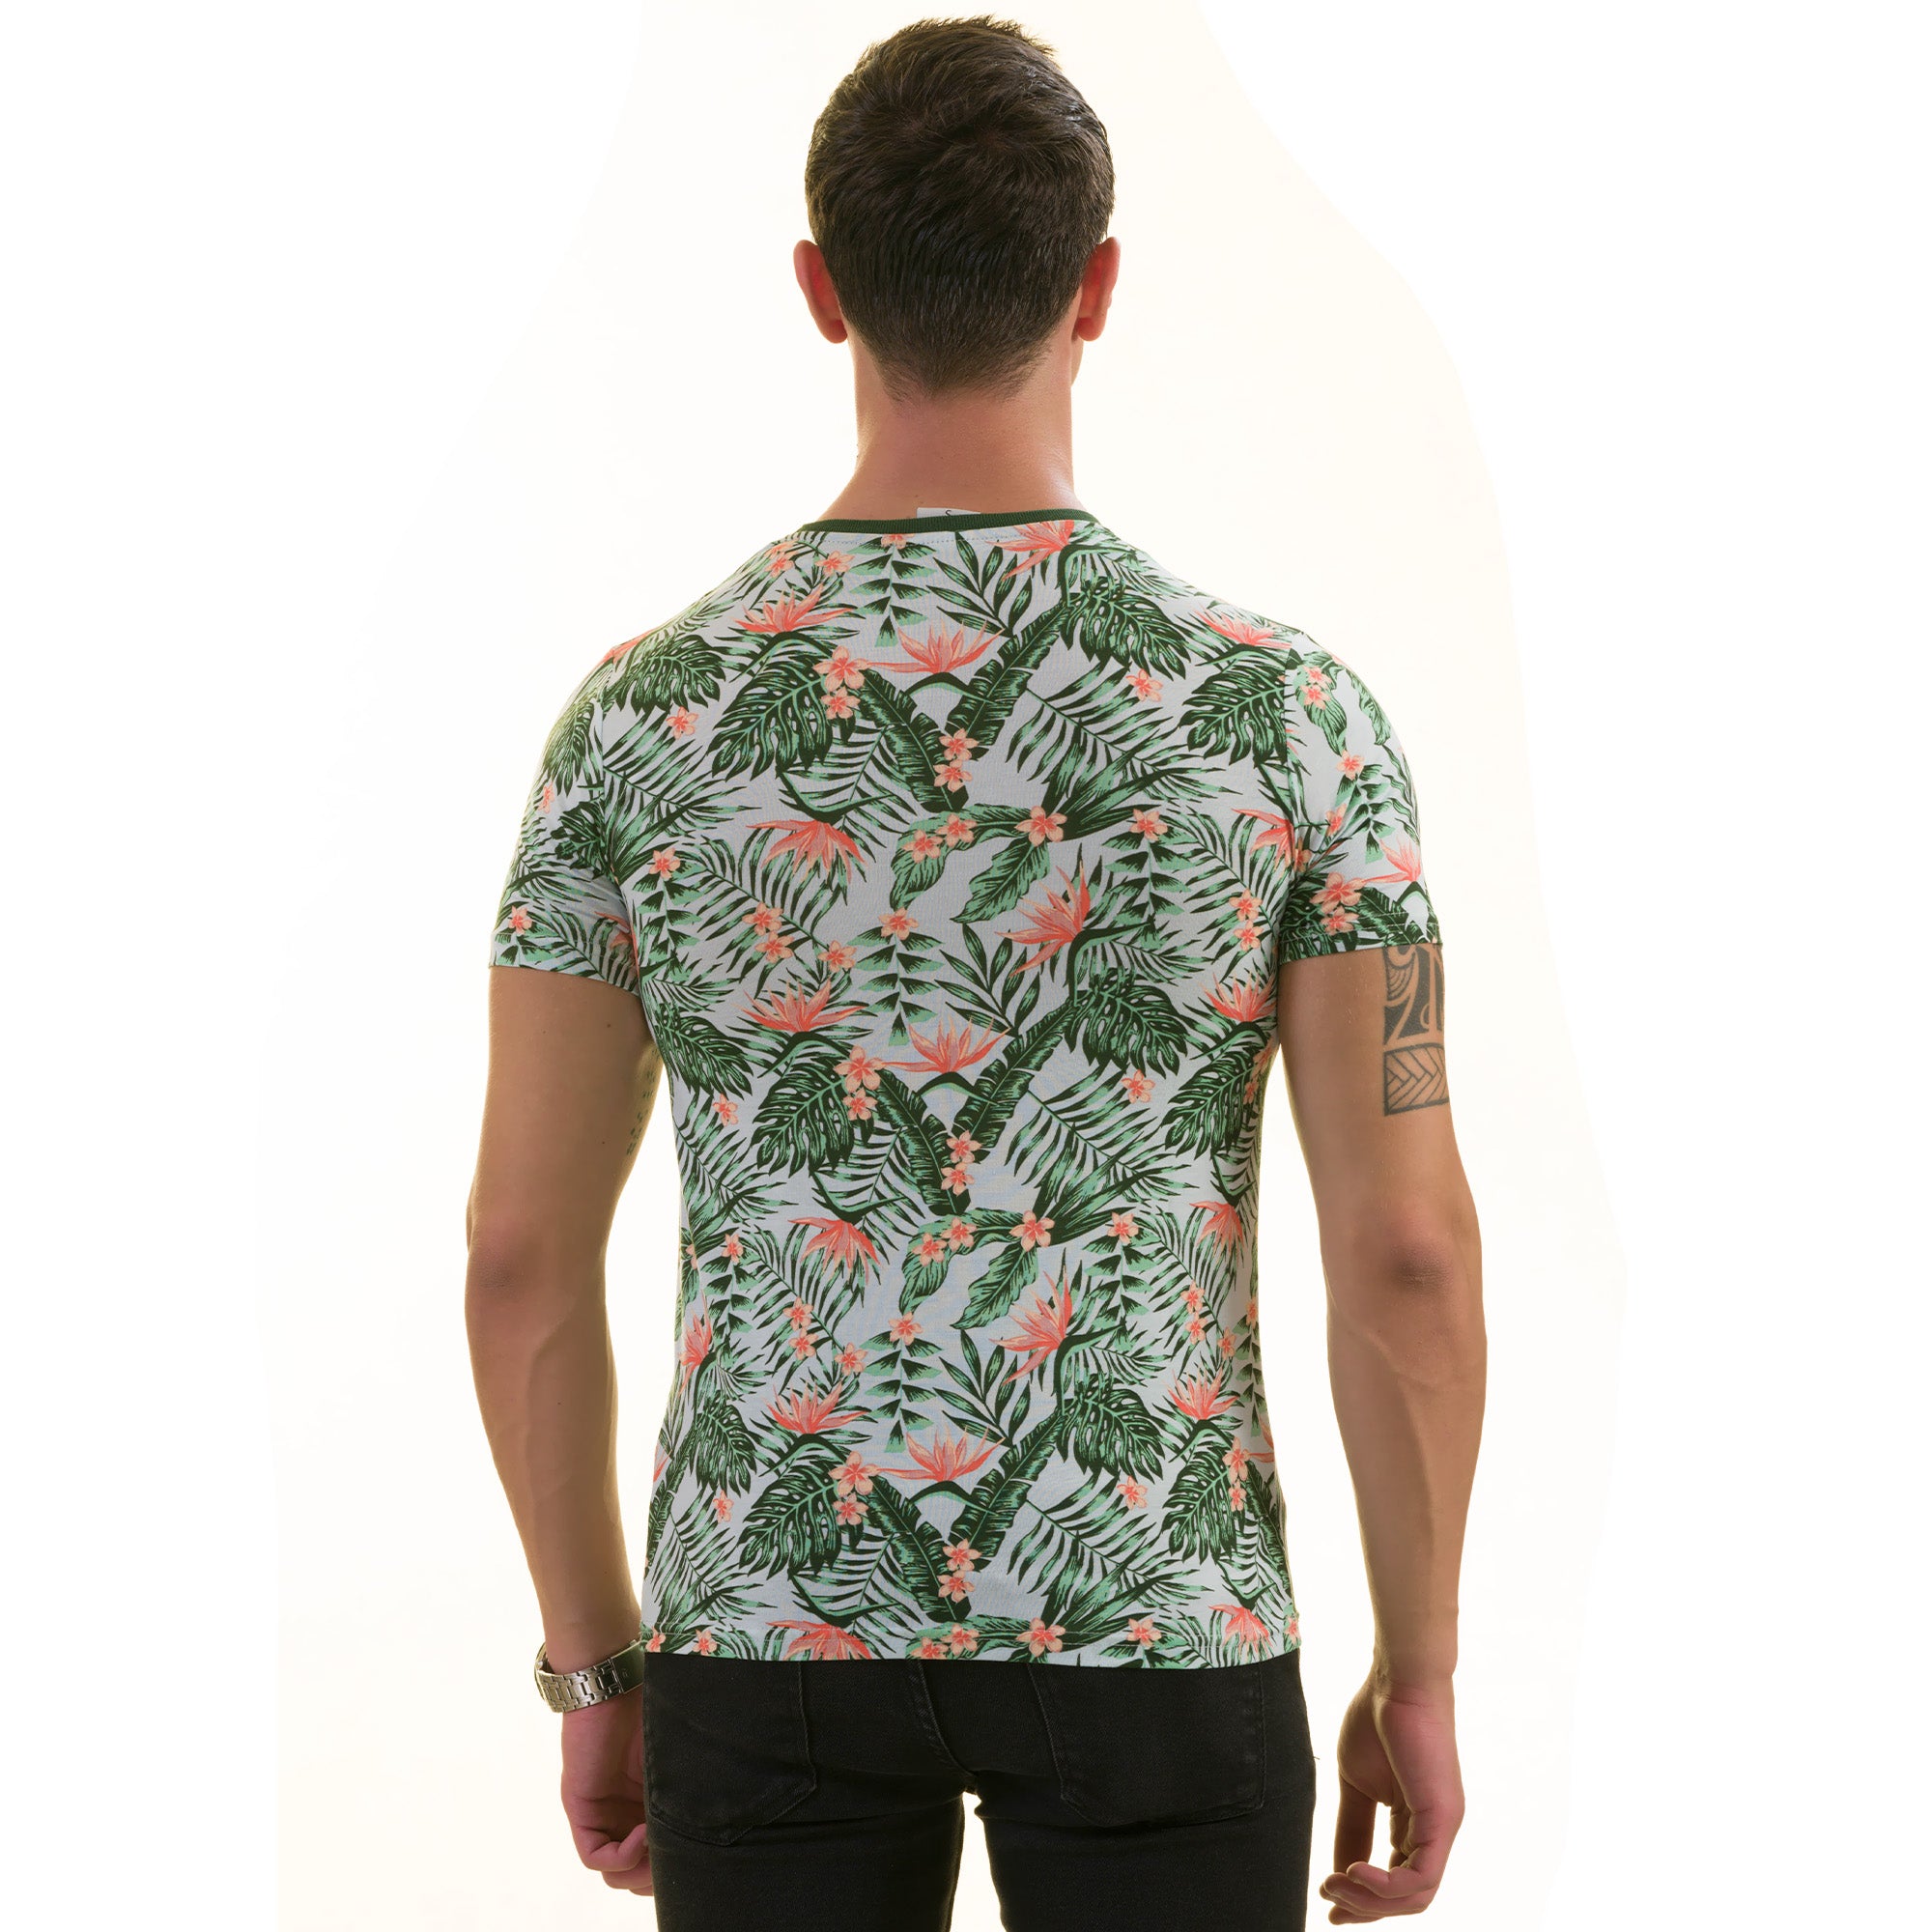 Peach Floral Green Leaves T- Shirt | European Made Premium Quality - Crew Neck Short Sleeve T-Shirts